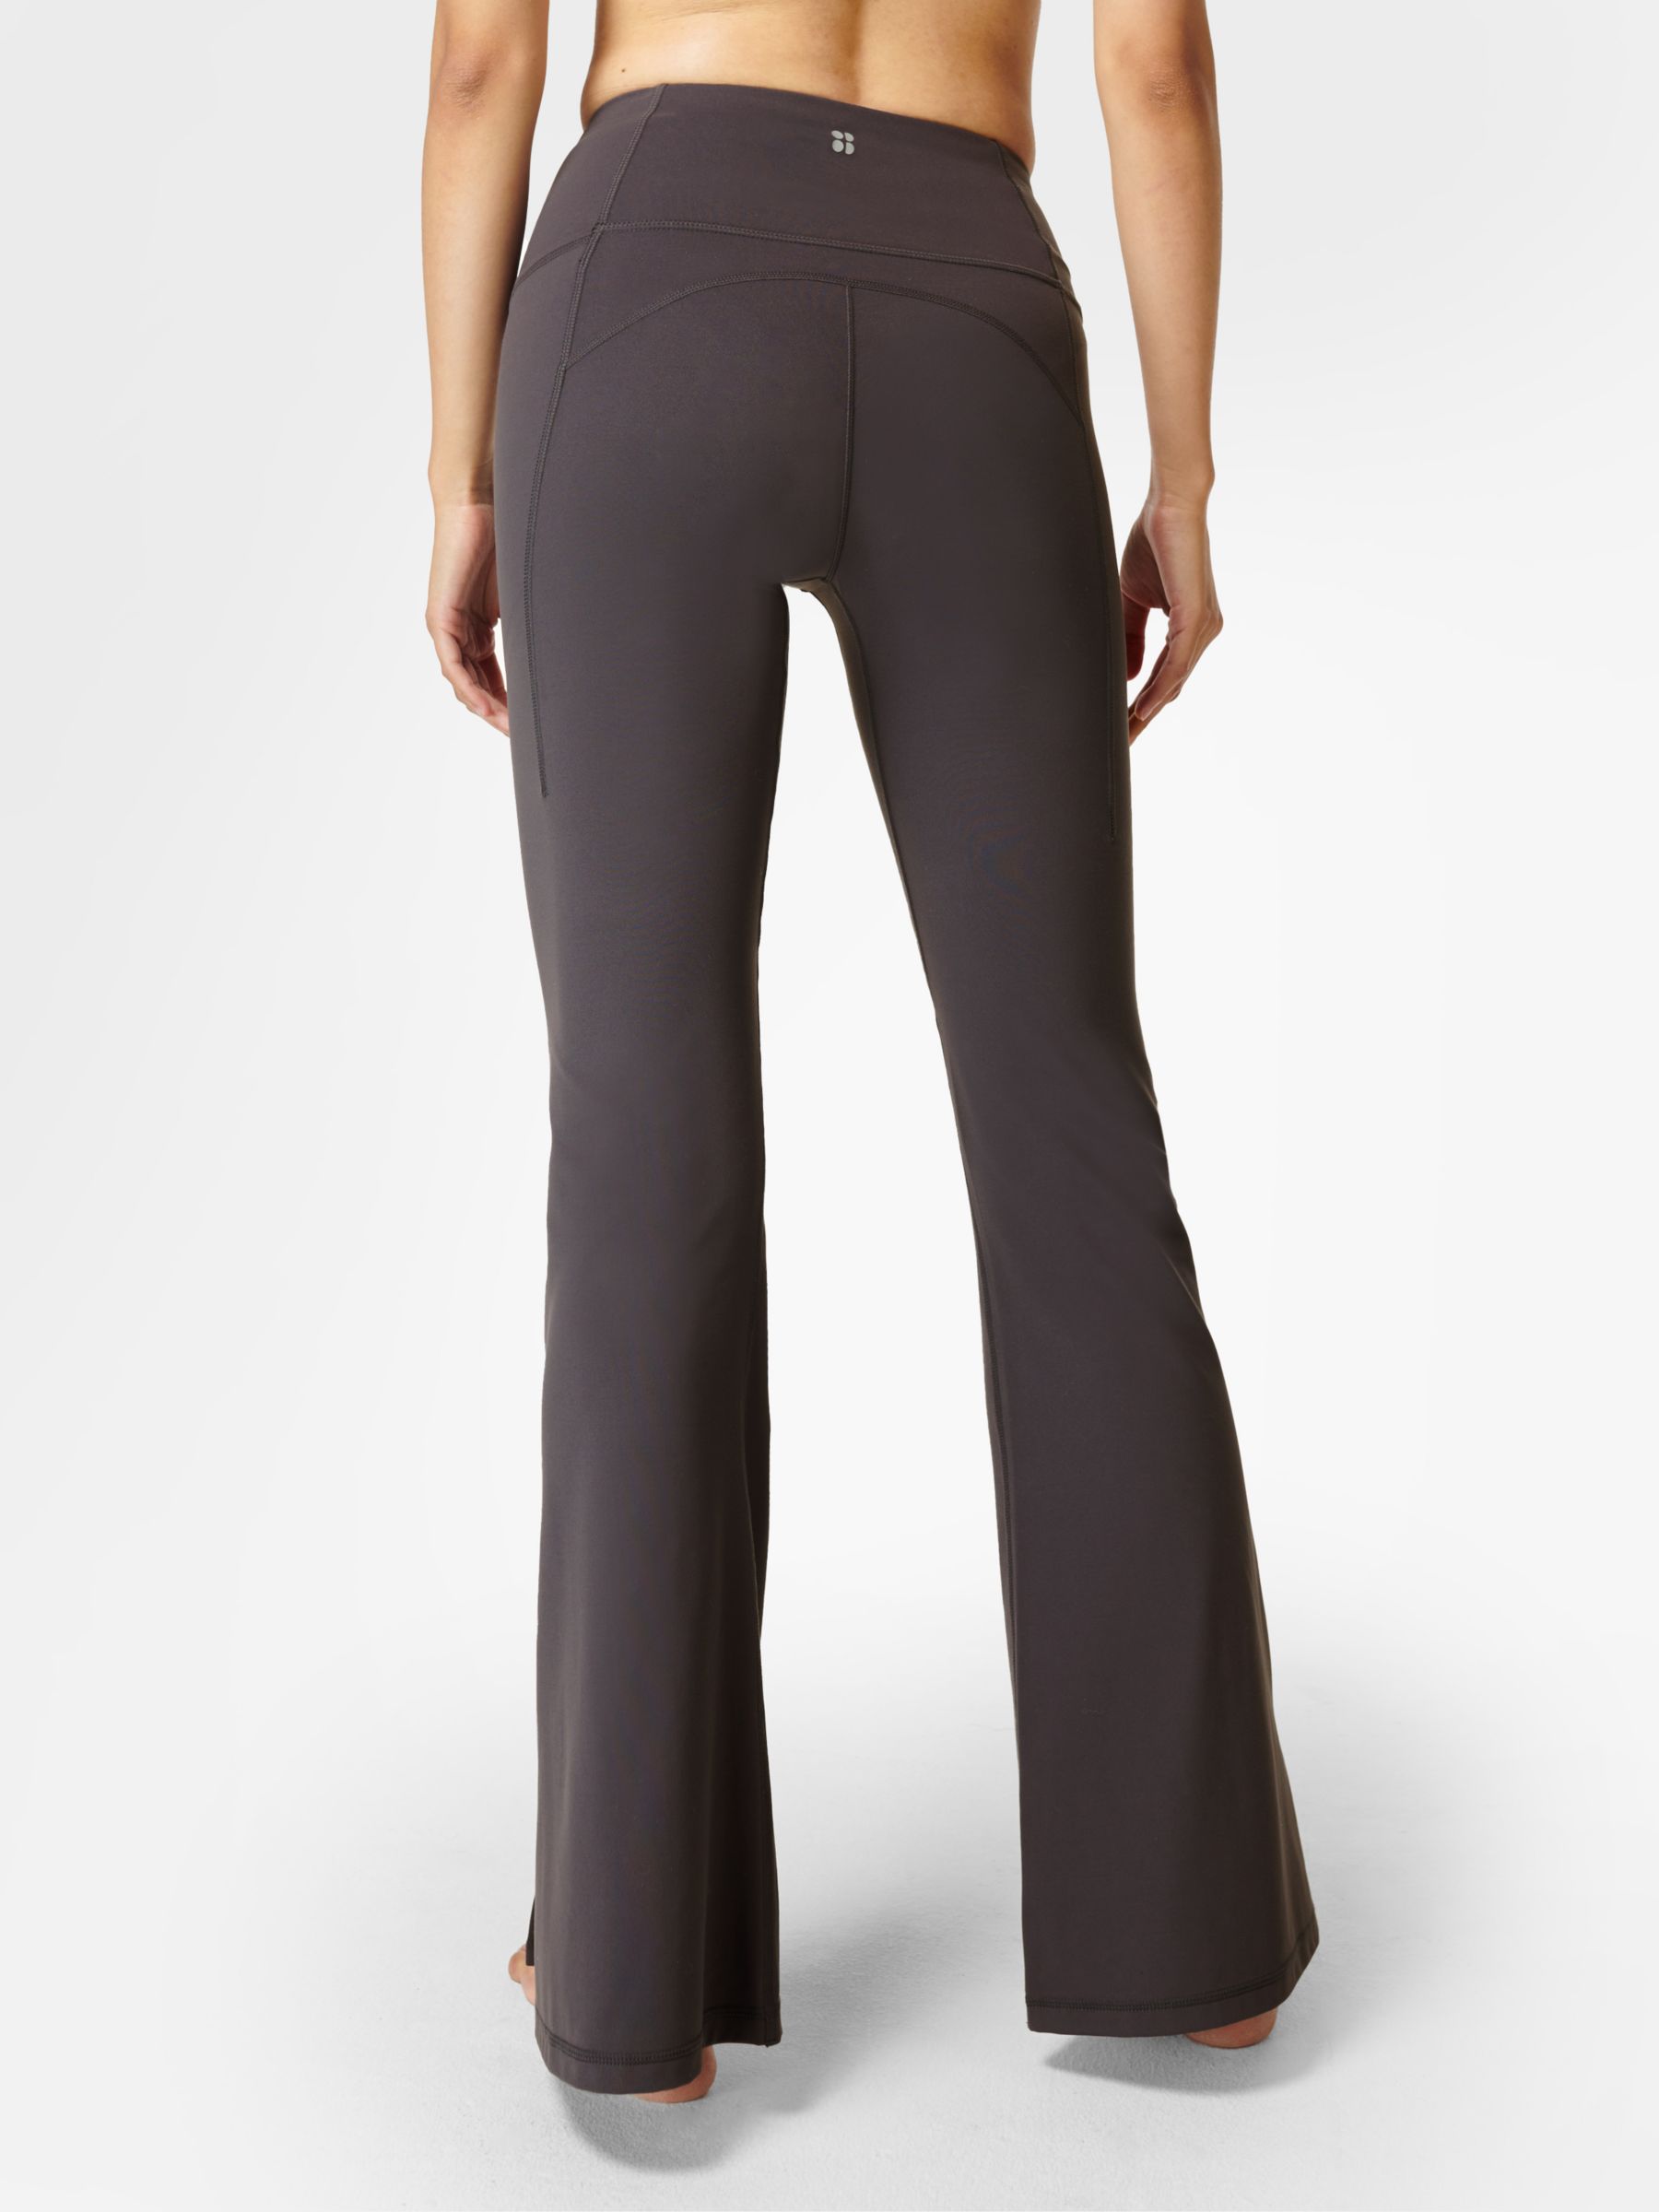 Sweaty Betty Super Soft 32 Flare Yoga Trousers, Urban Grey at John Lewis &  Partners